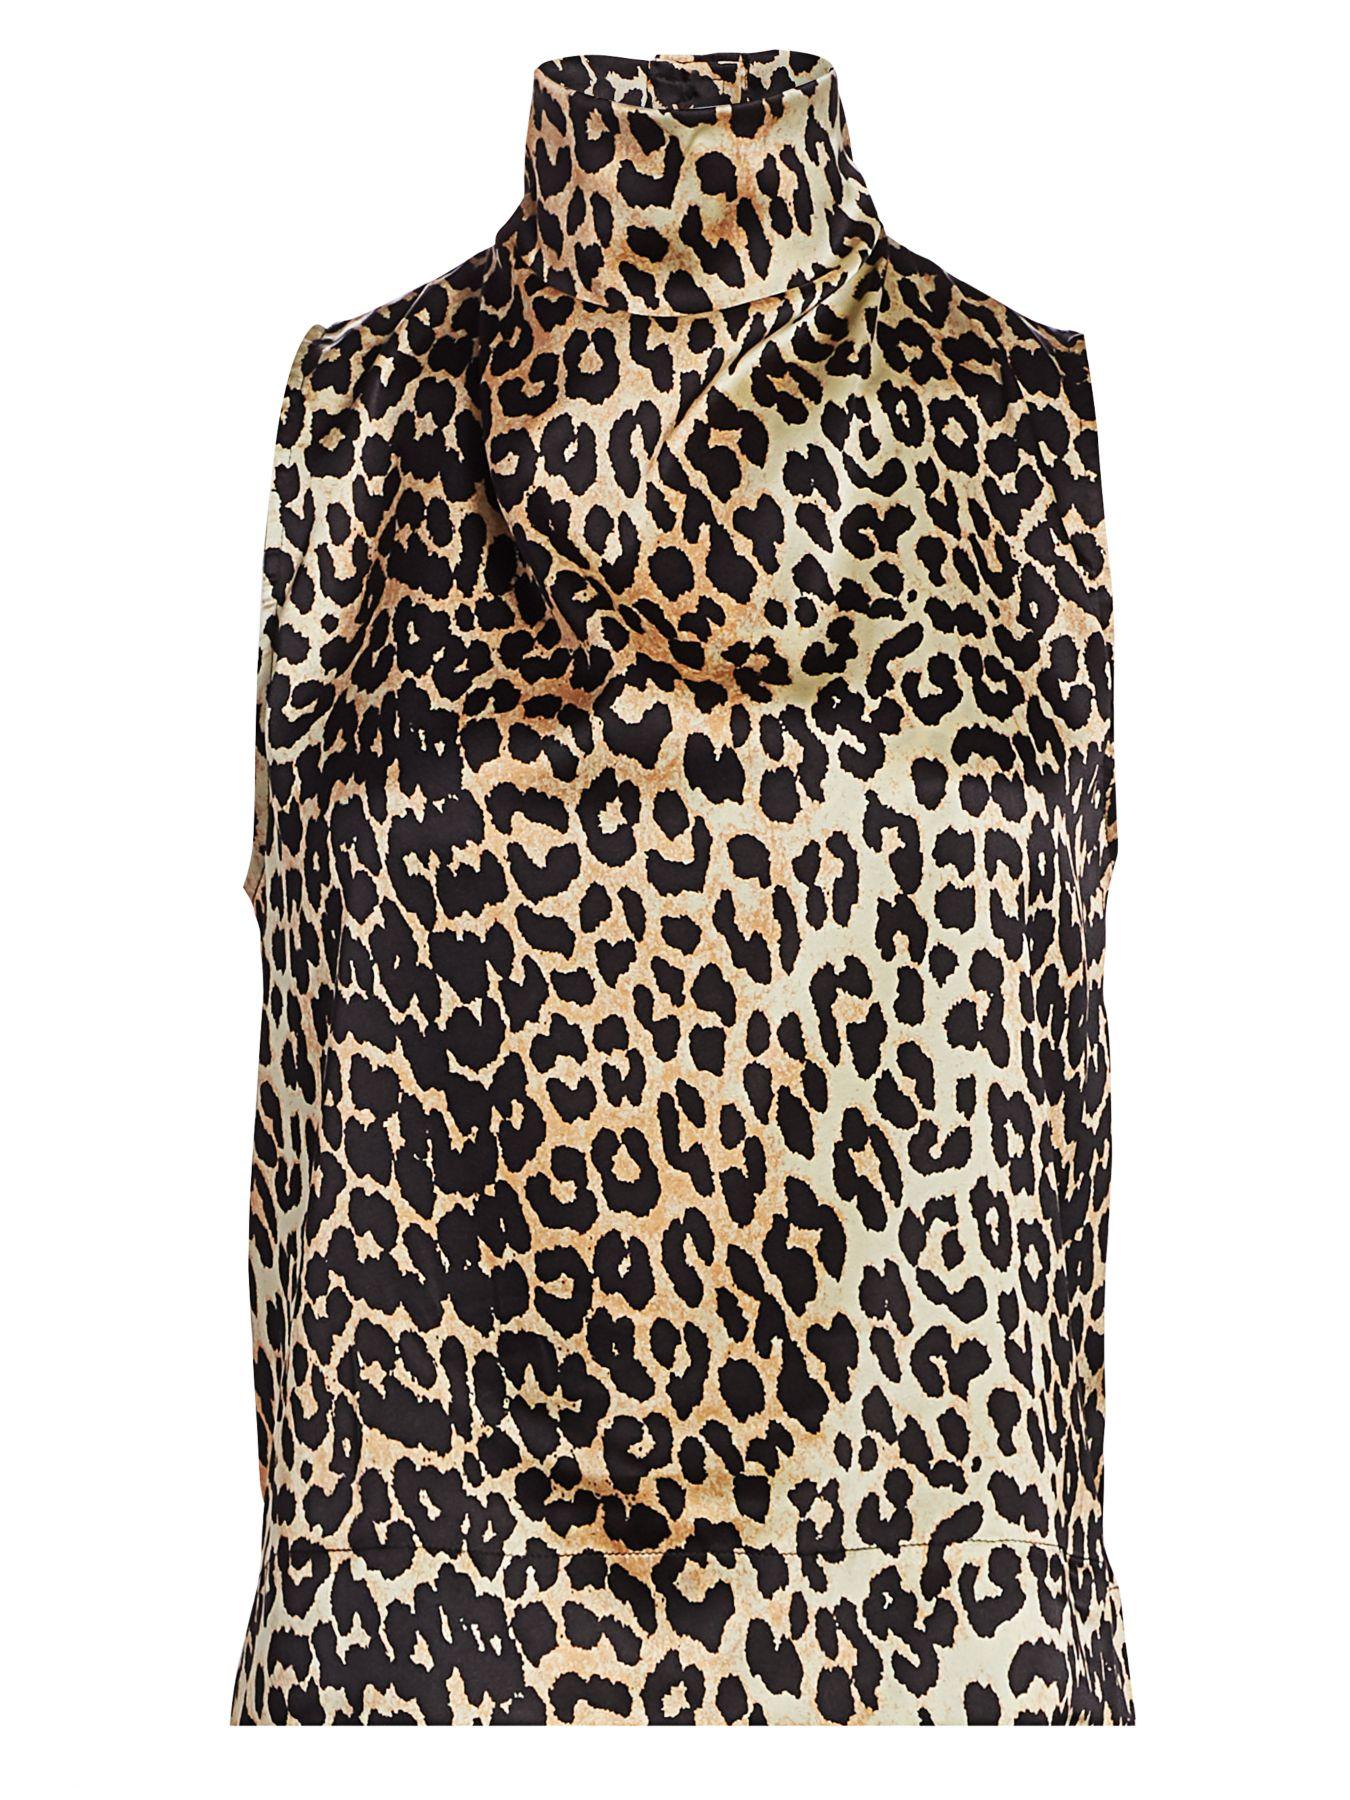 Ganni Leopard-print Stretch Silk-satin Top in Black - Lyst